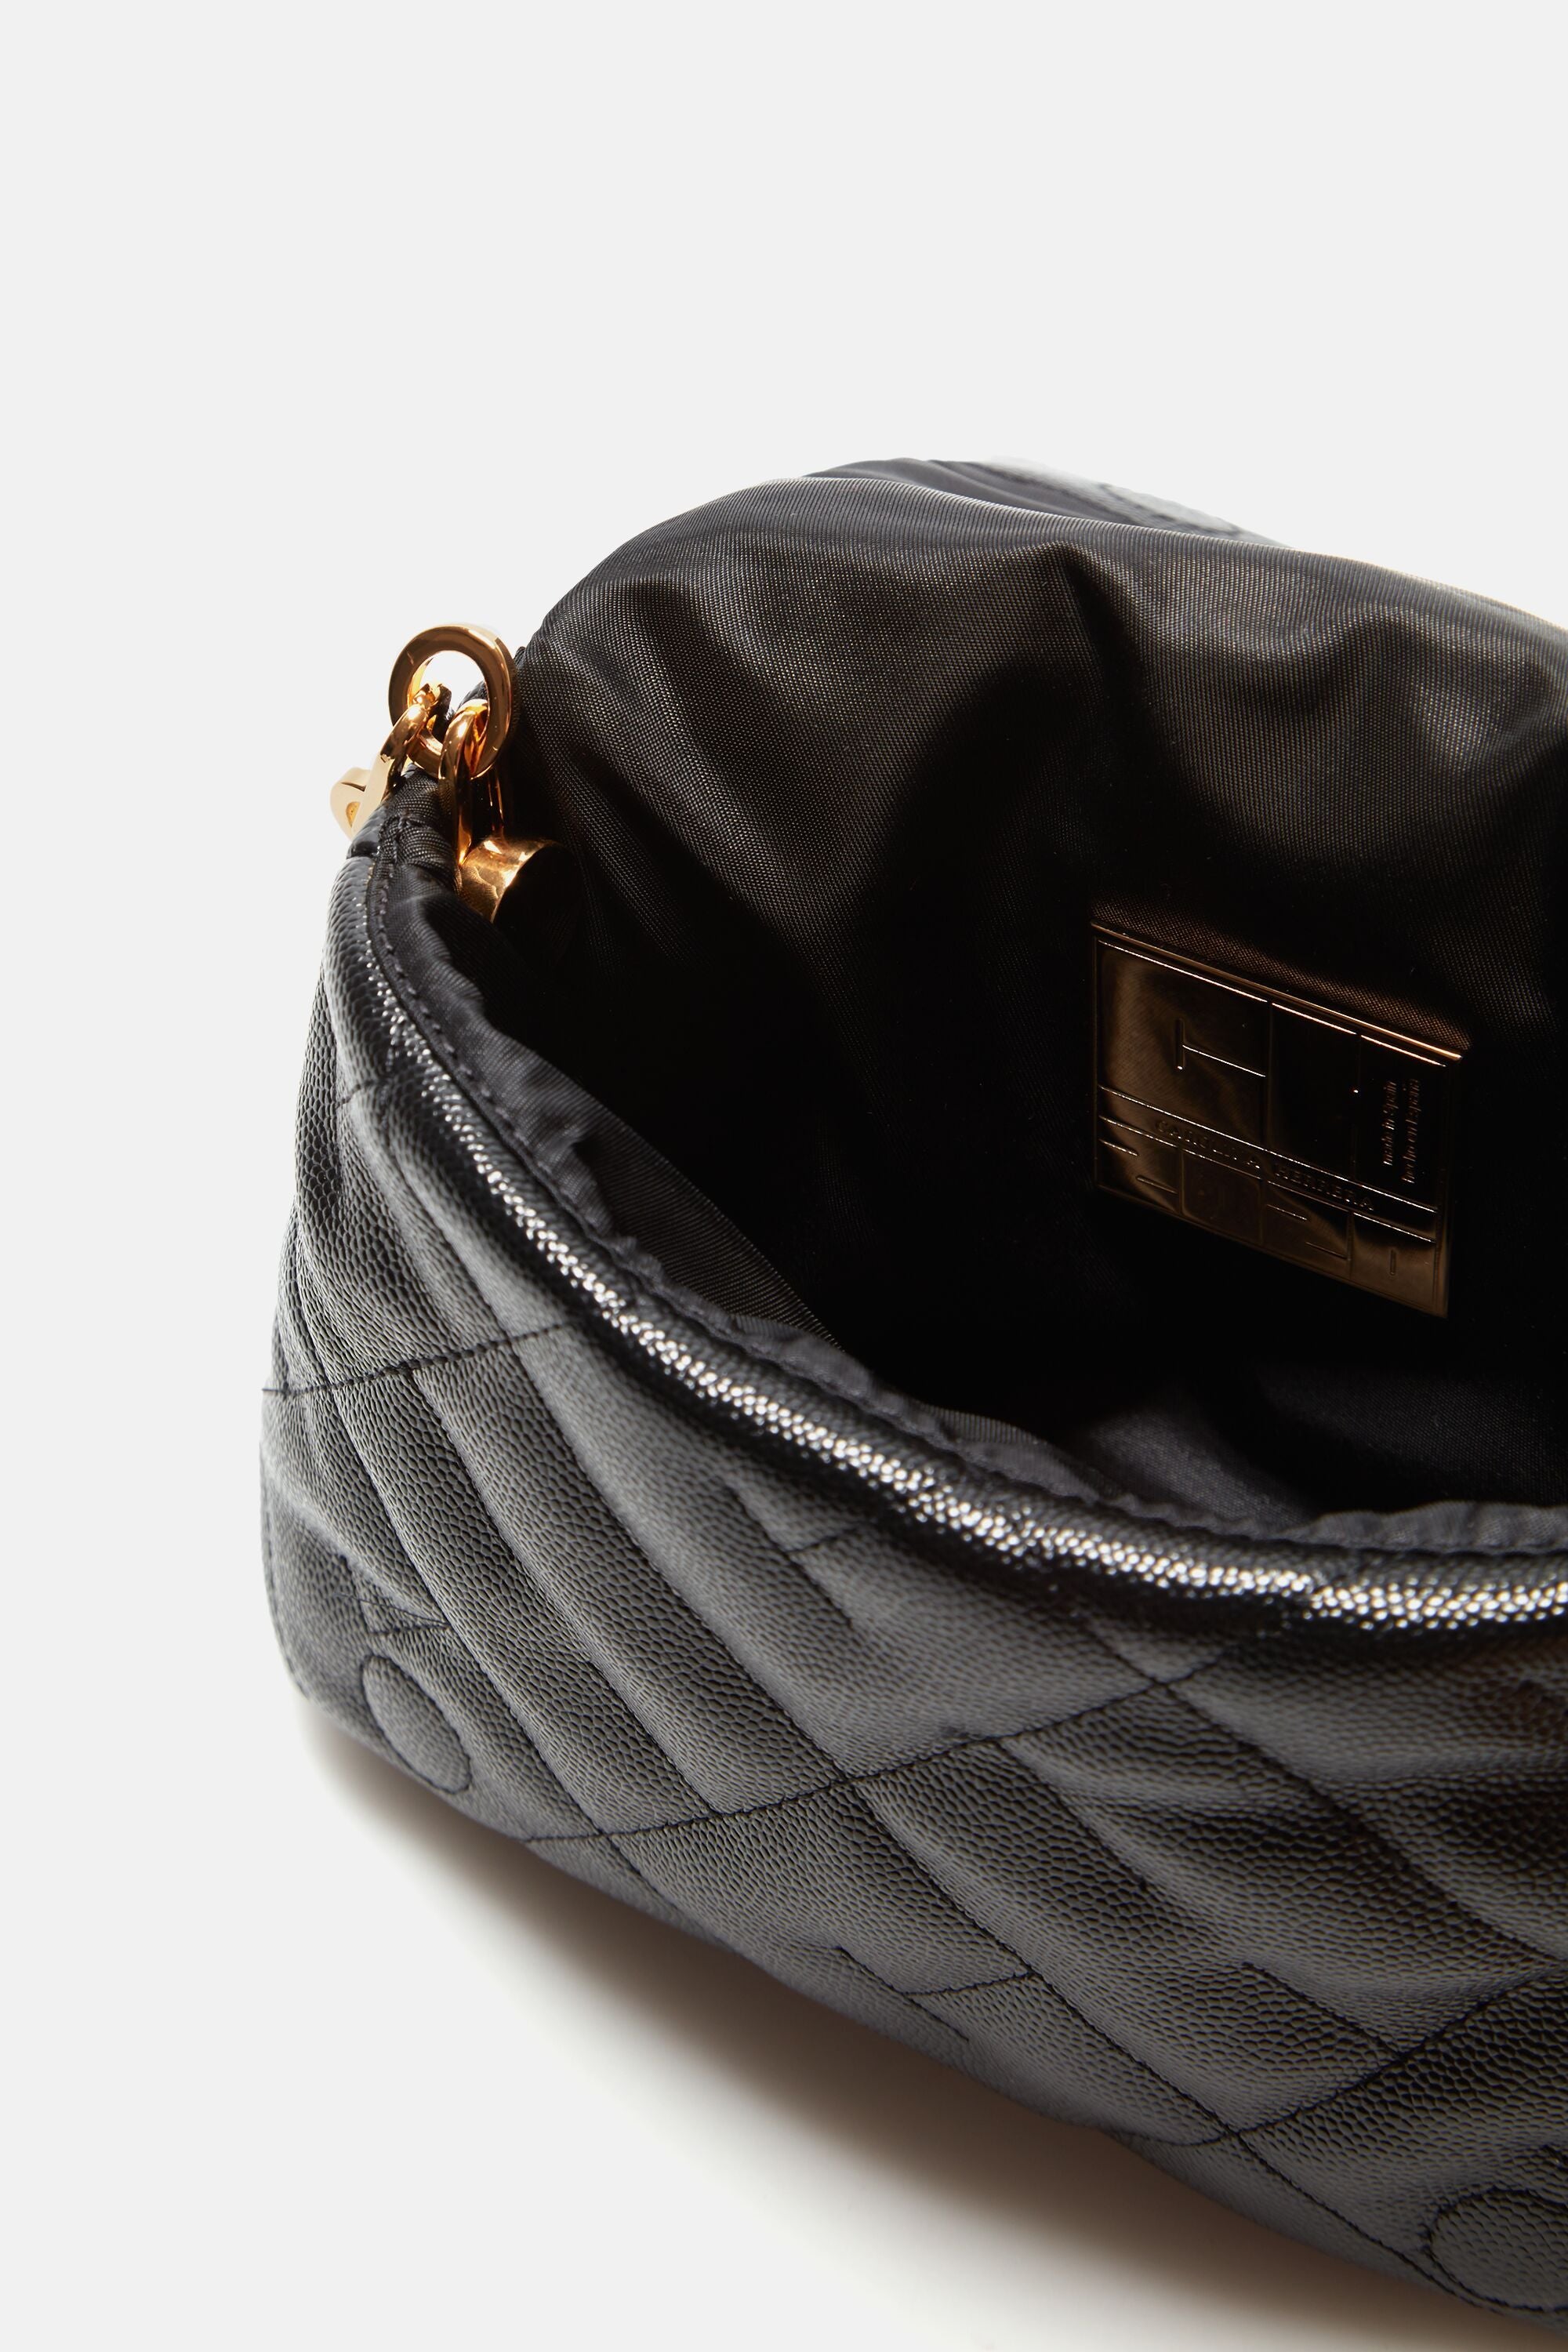 CHANEL CC Logo Soft Quilted Leather Duffle Shoulder Bag Black